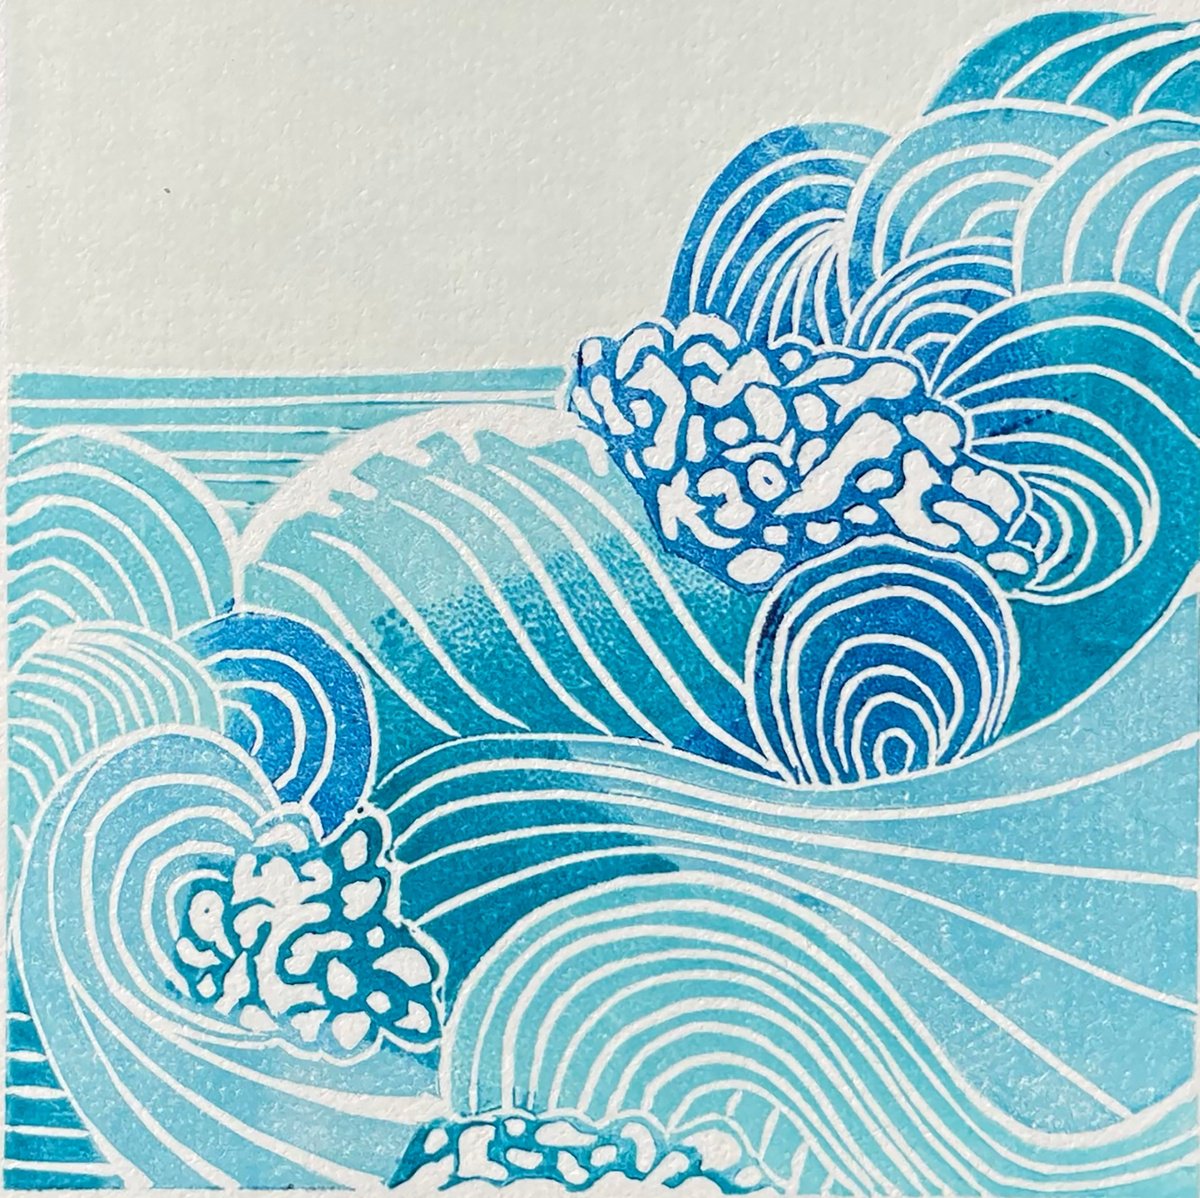 The swell - Waves Linocut Print - Mini Print by C Staunton